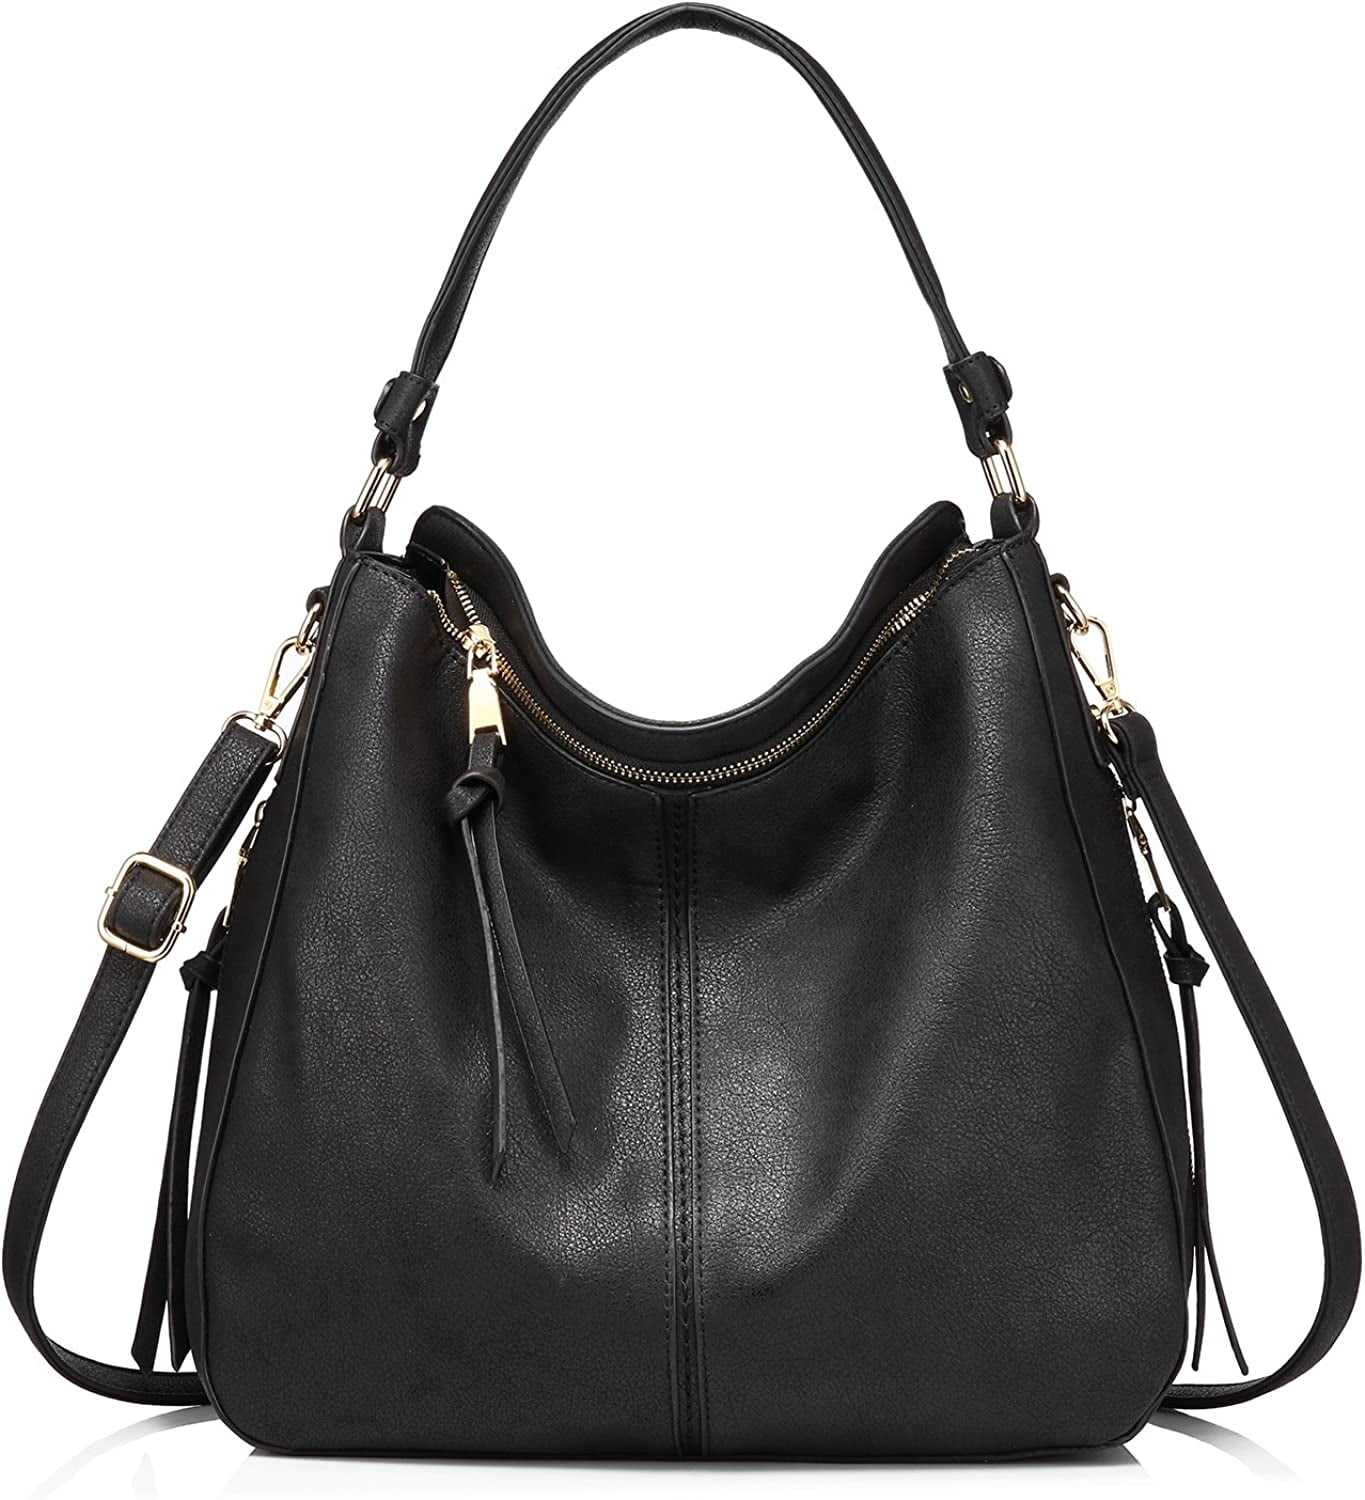 Women large black leather handbag 